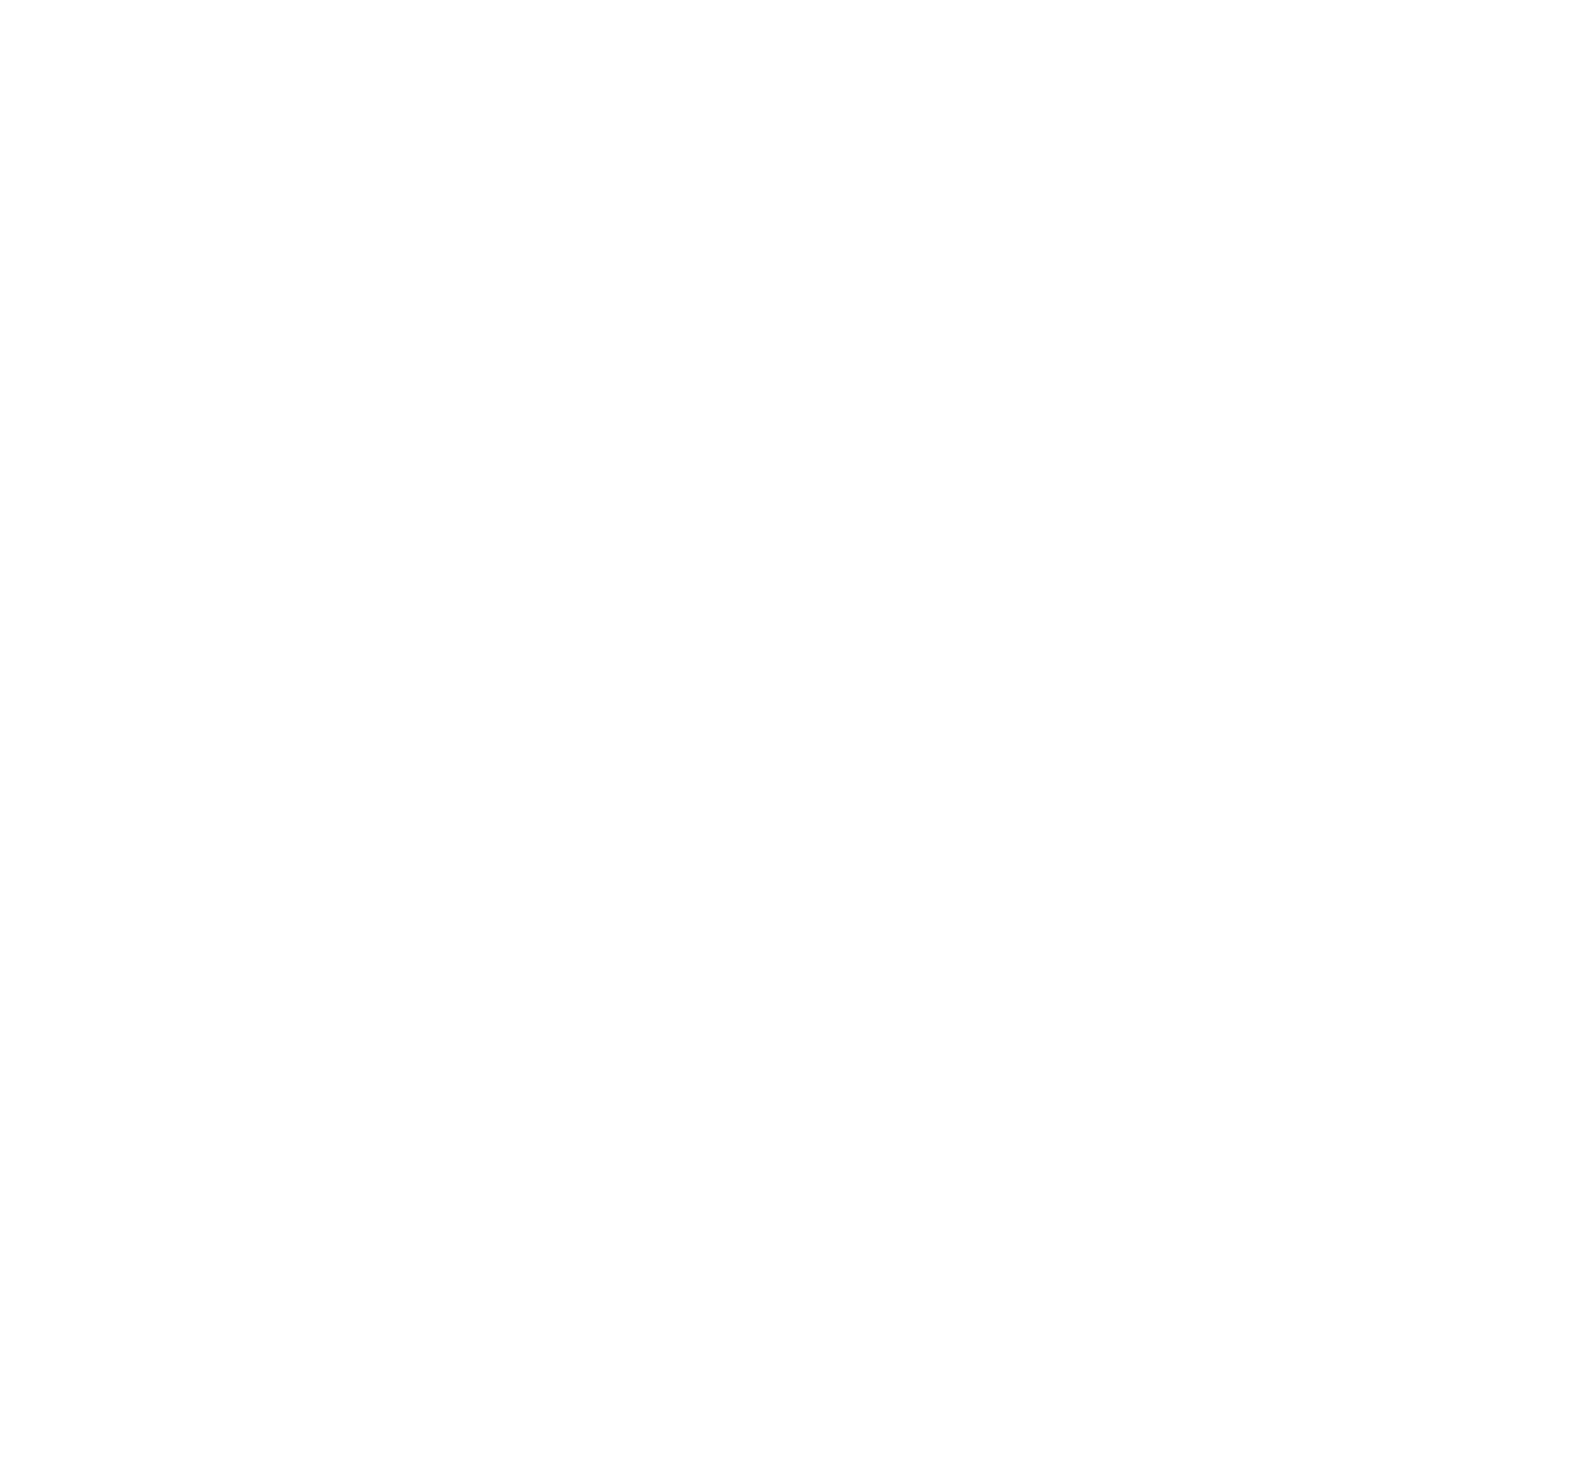 Qatar Aluminium Manufacturing Company Logo groß für dunkle Hintergründe (transparentes PNG)